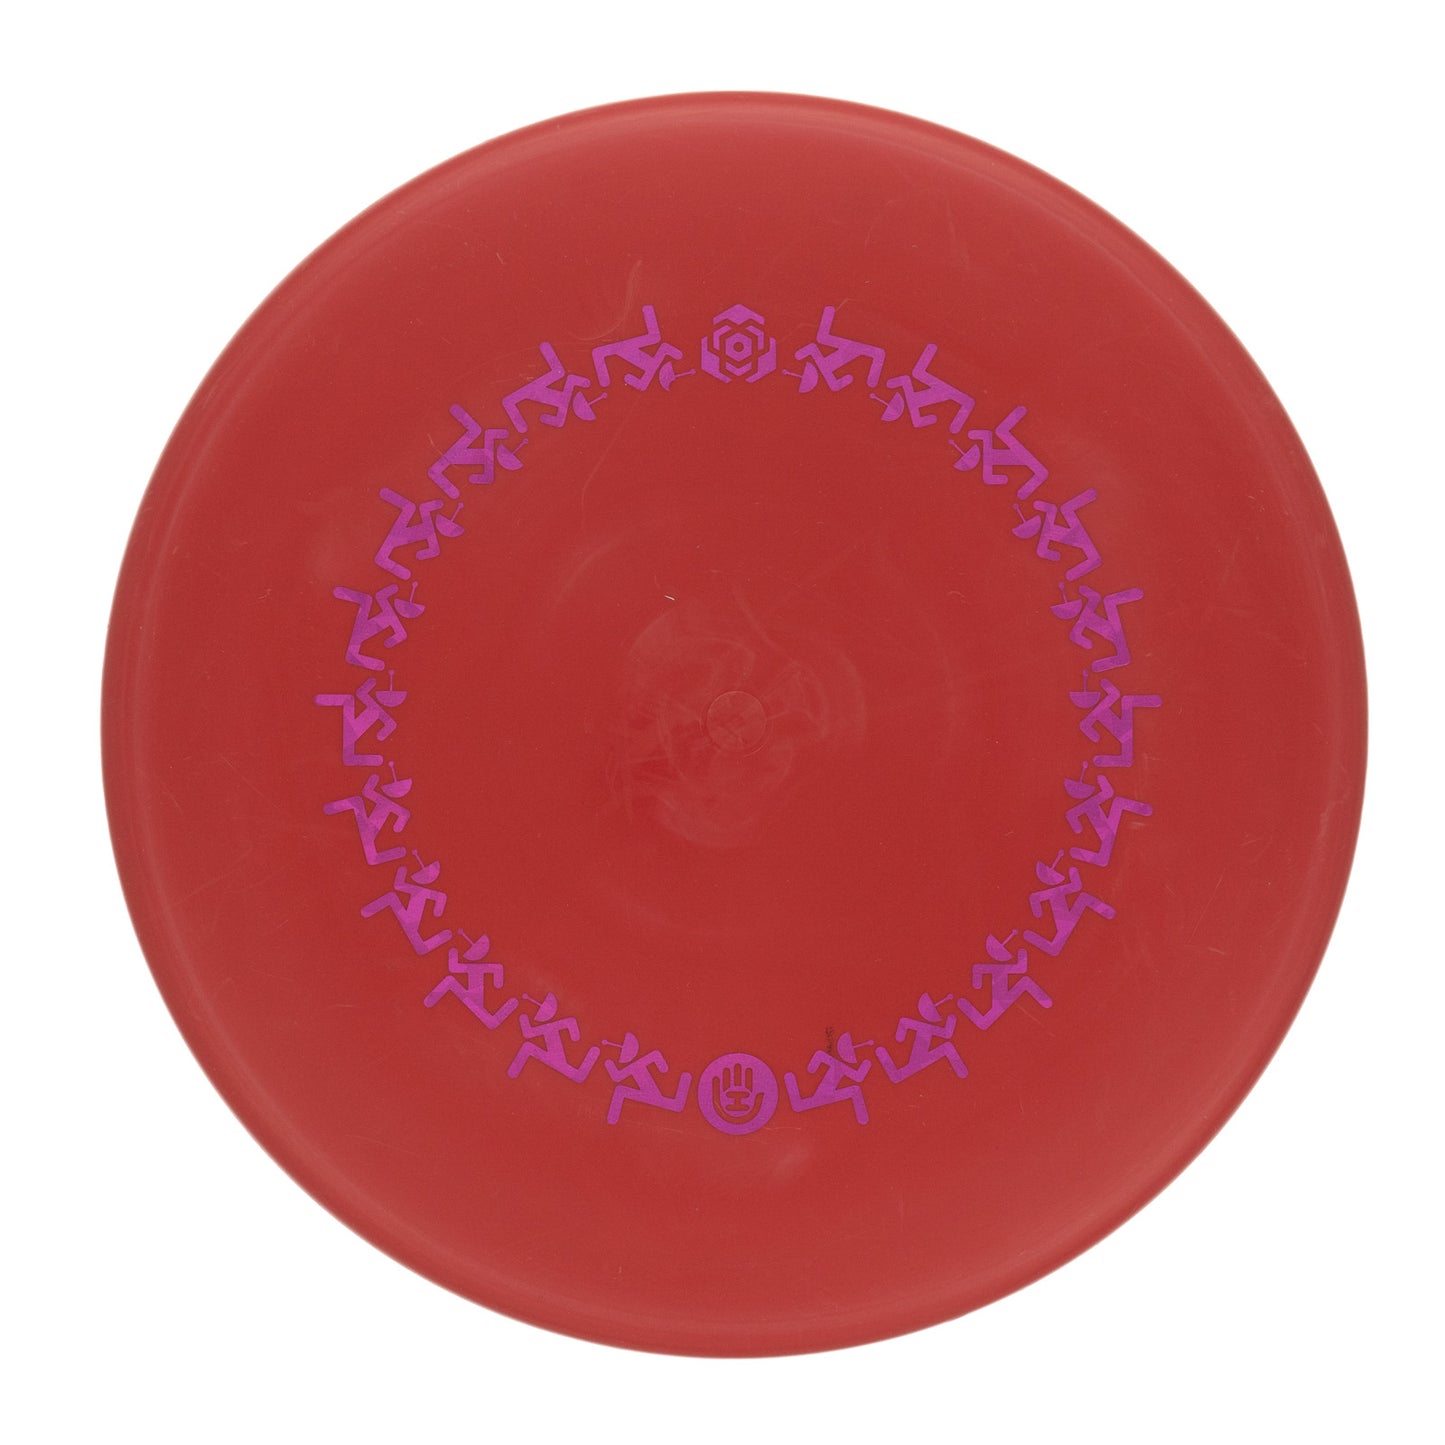 Dynamic Discs Judge - Handeye Satellite Runner Stamp Classic 174g | Style 0002